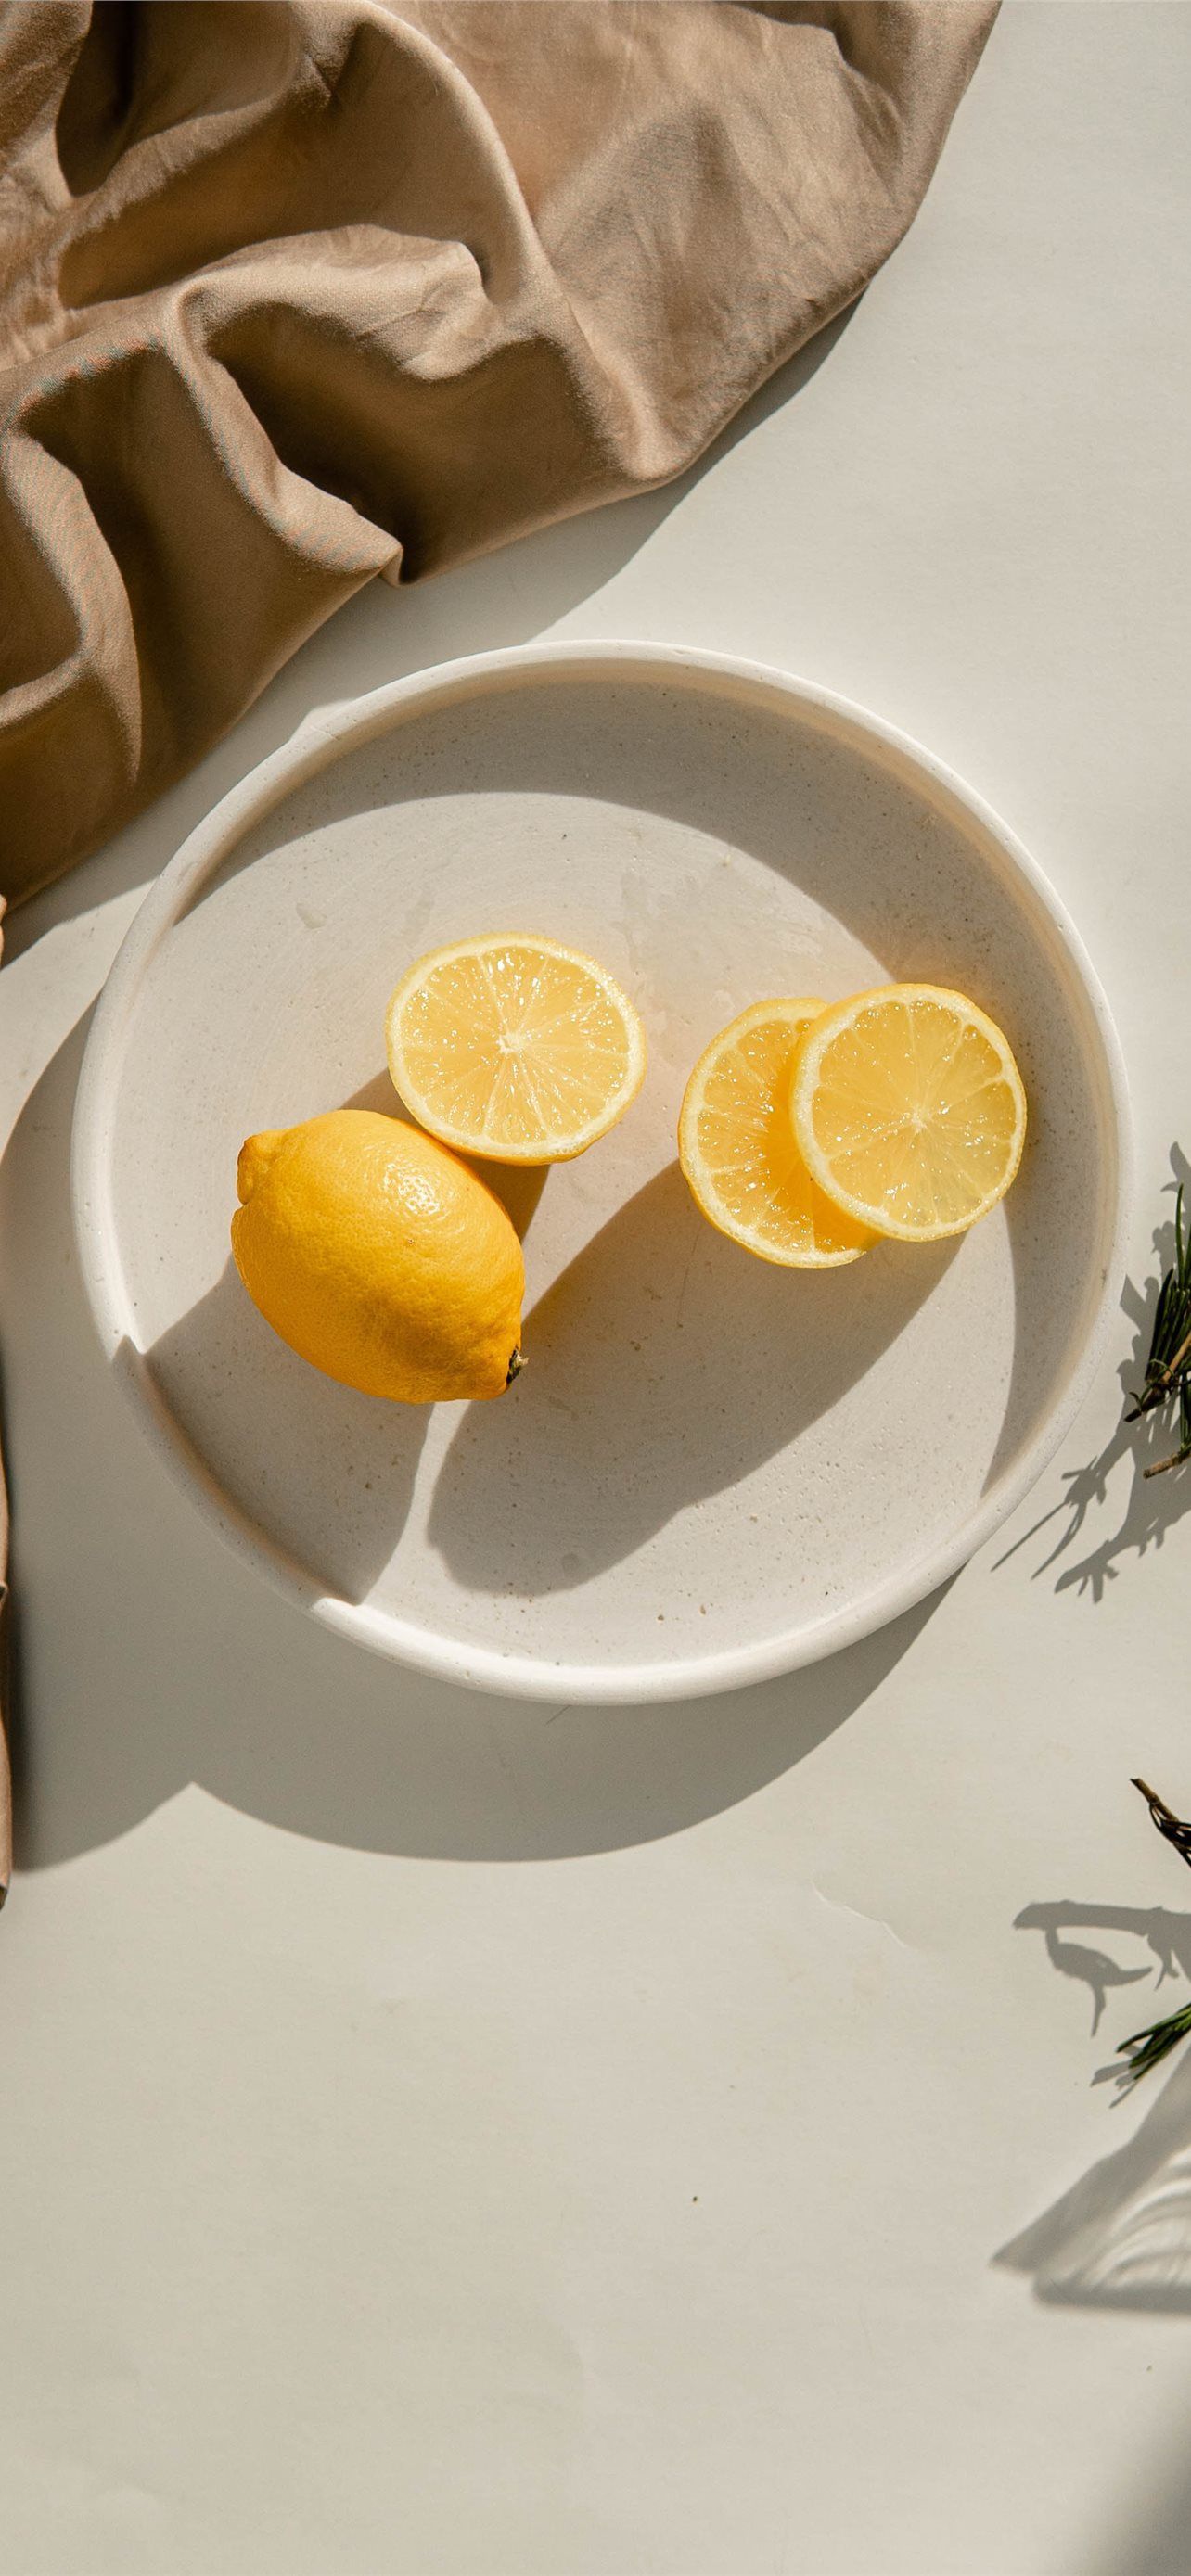 sliced lemon on white ceramic plate iPhone Wallpaper Free Download